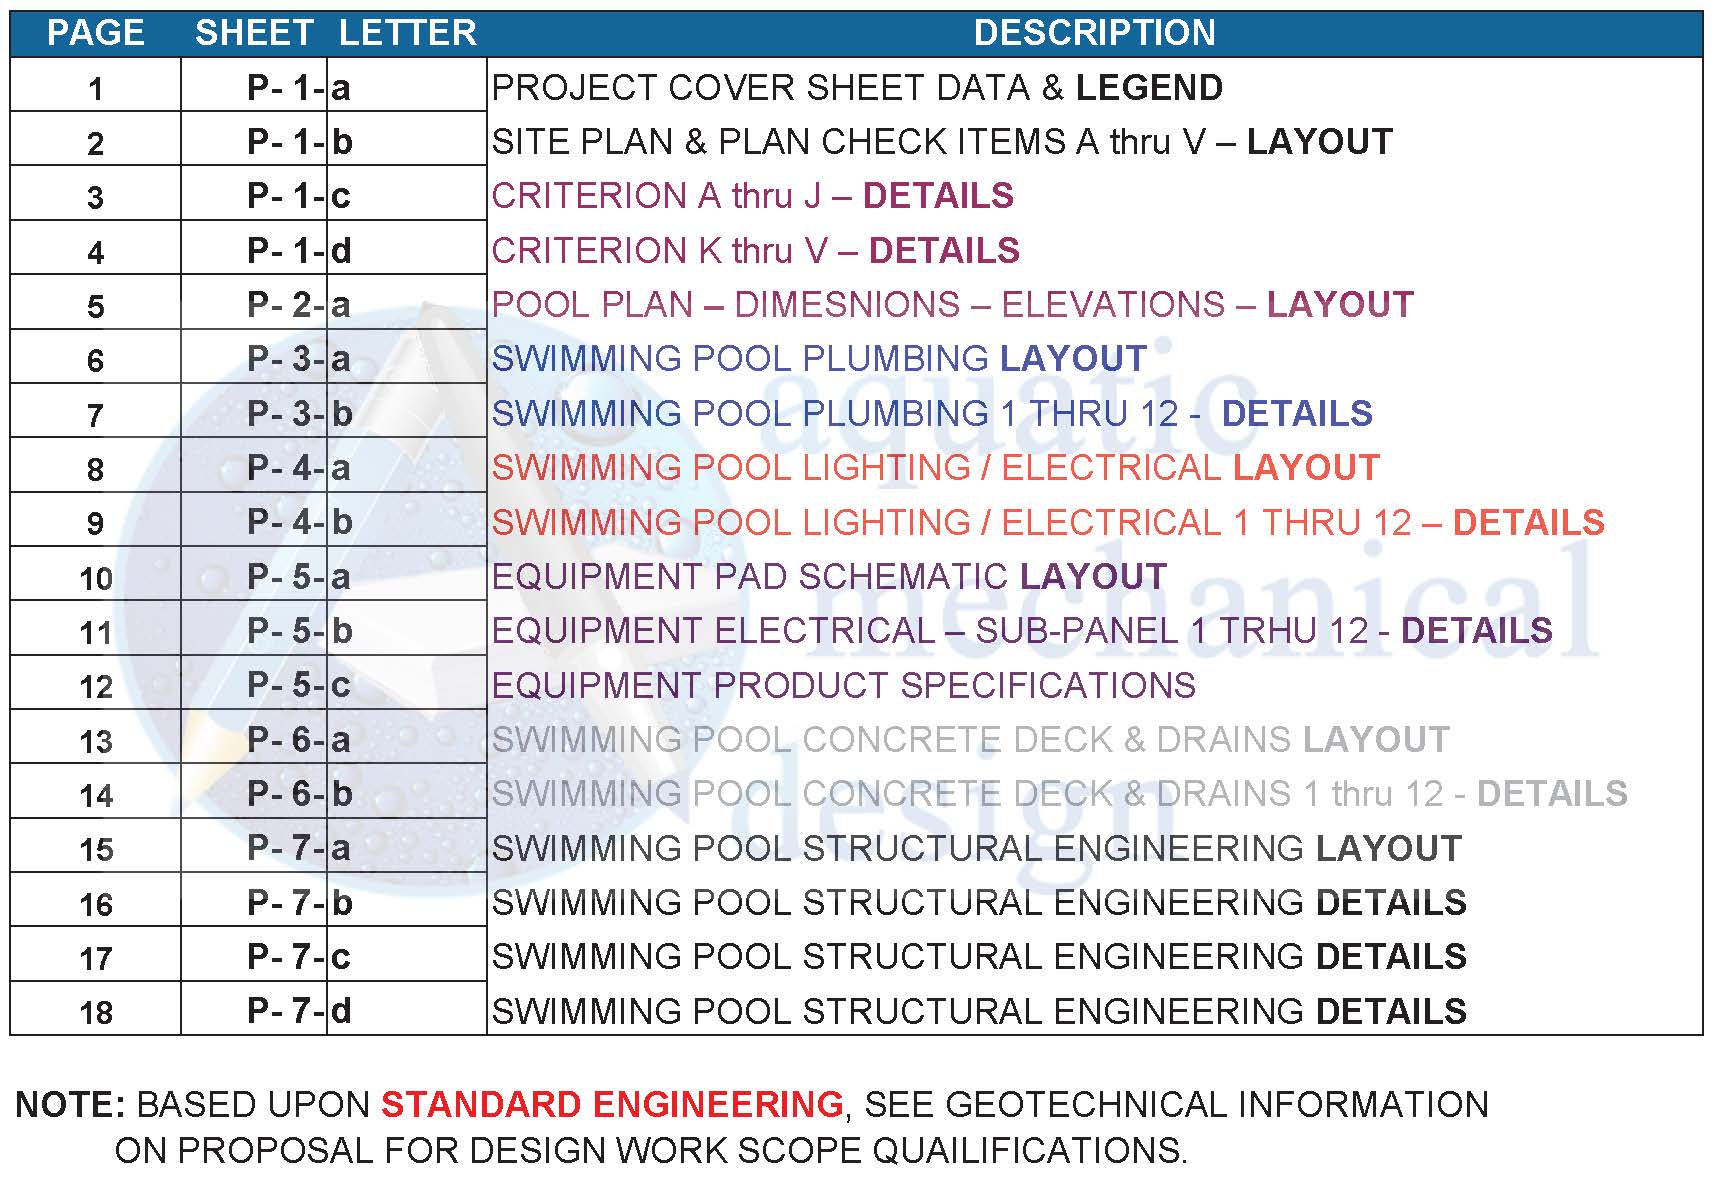 Planning Sheet Listing 4-26-22